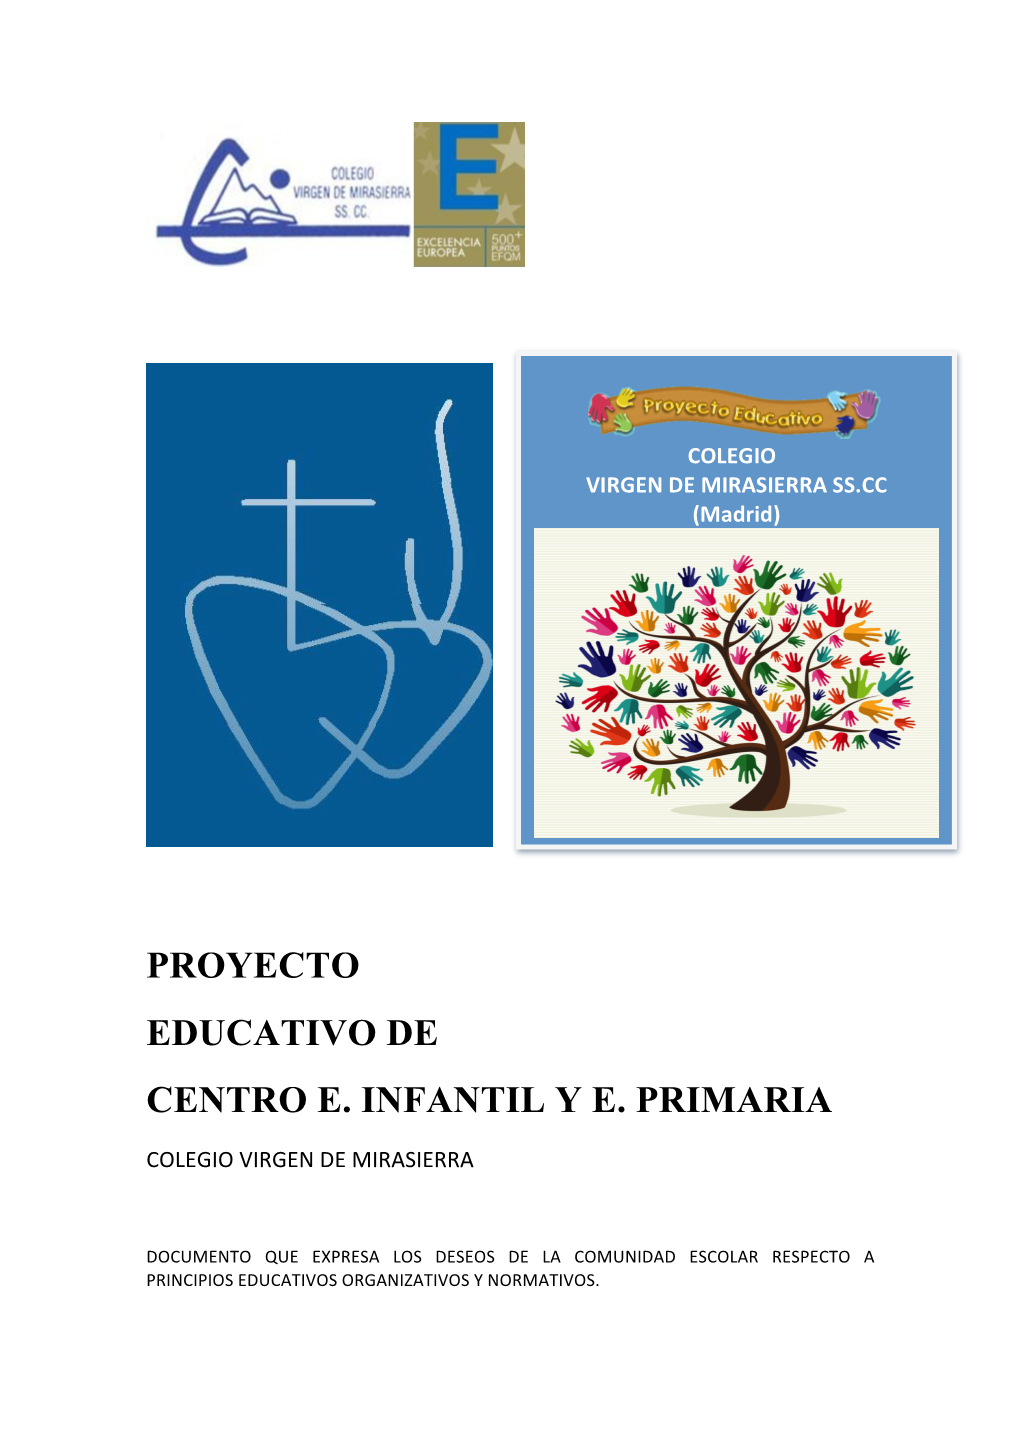 Proyecto Educativo De Centro E. Infantil Y E. Primaria